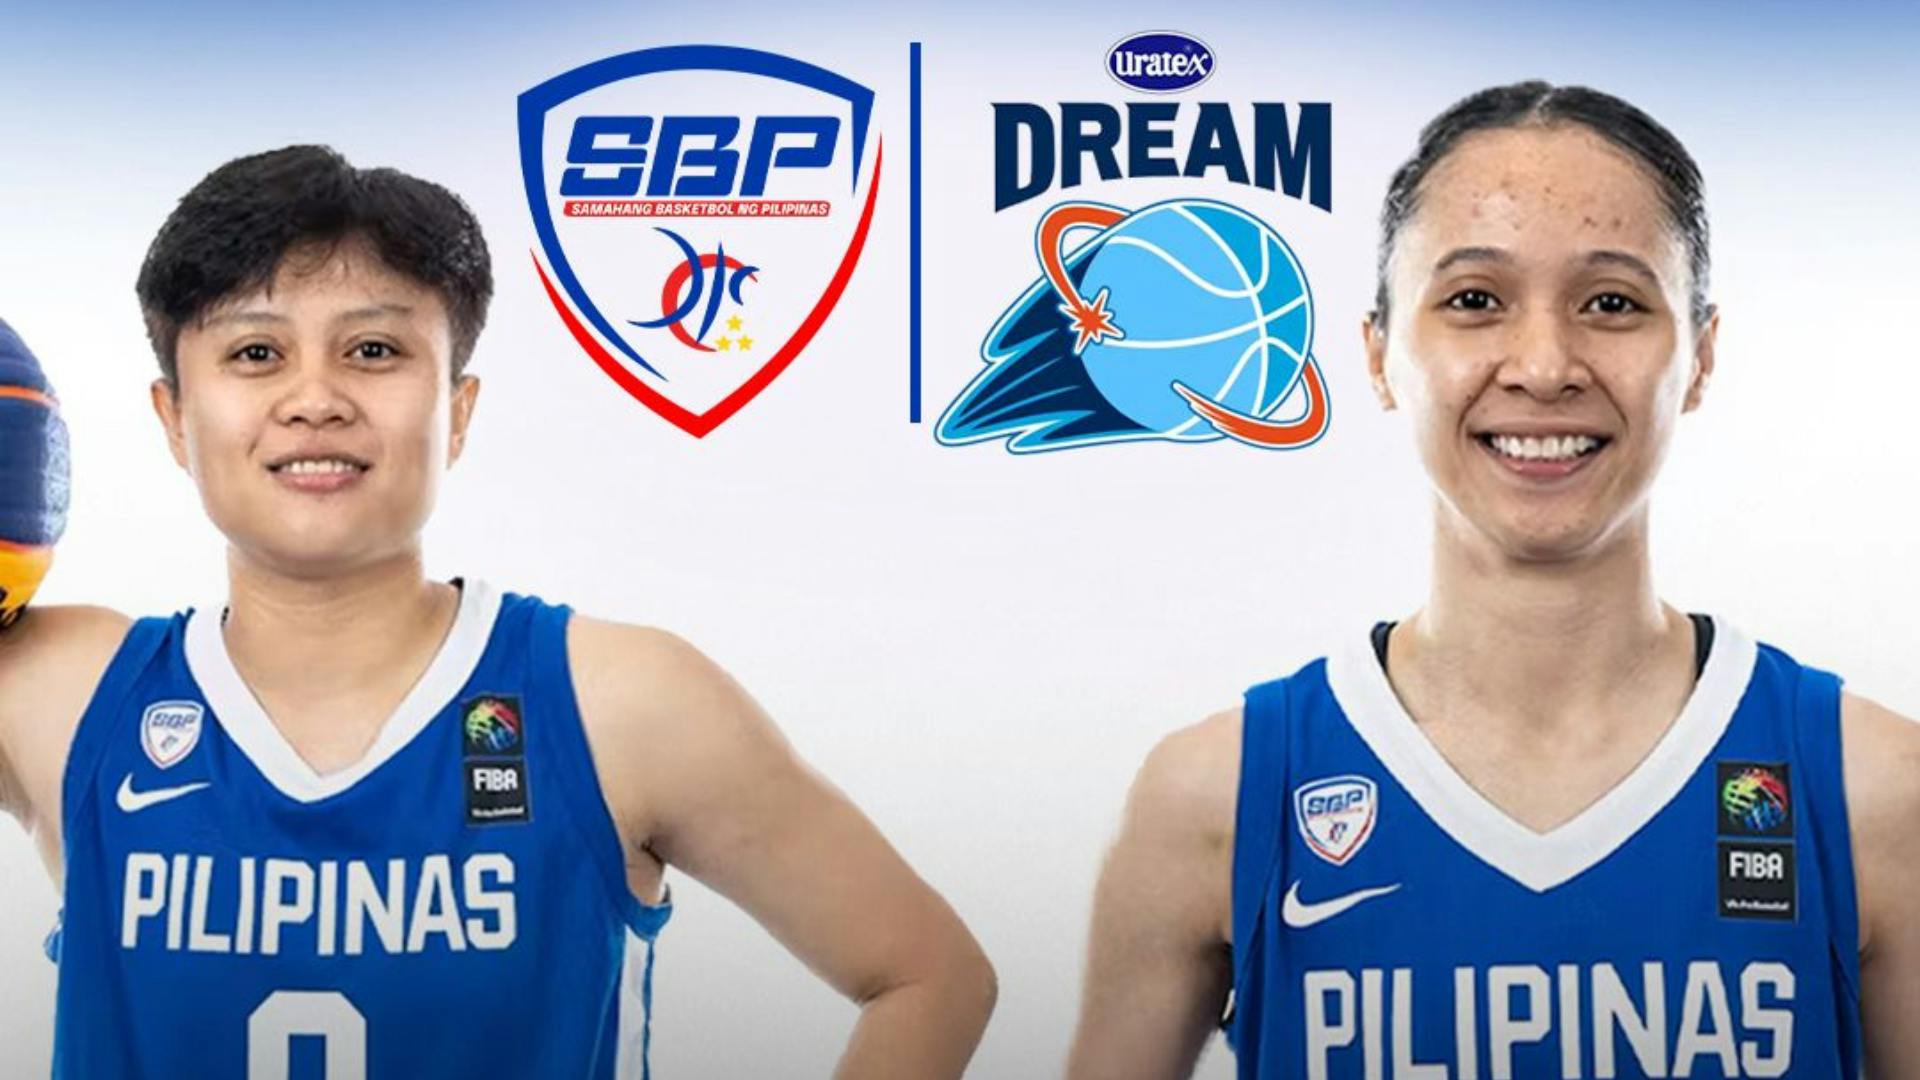 SBP, Uratex Dream team up for FIBA 3x3 Women’s Series debut of Gilas Pilipinas